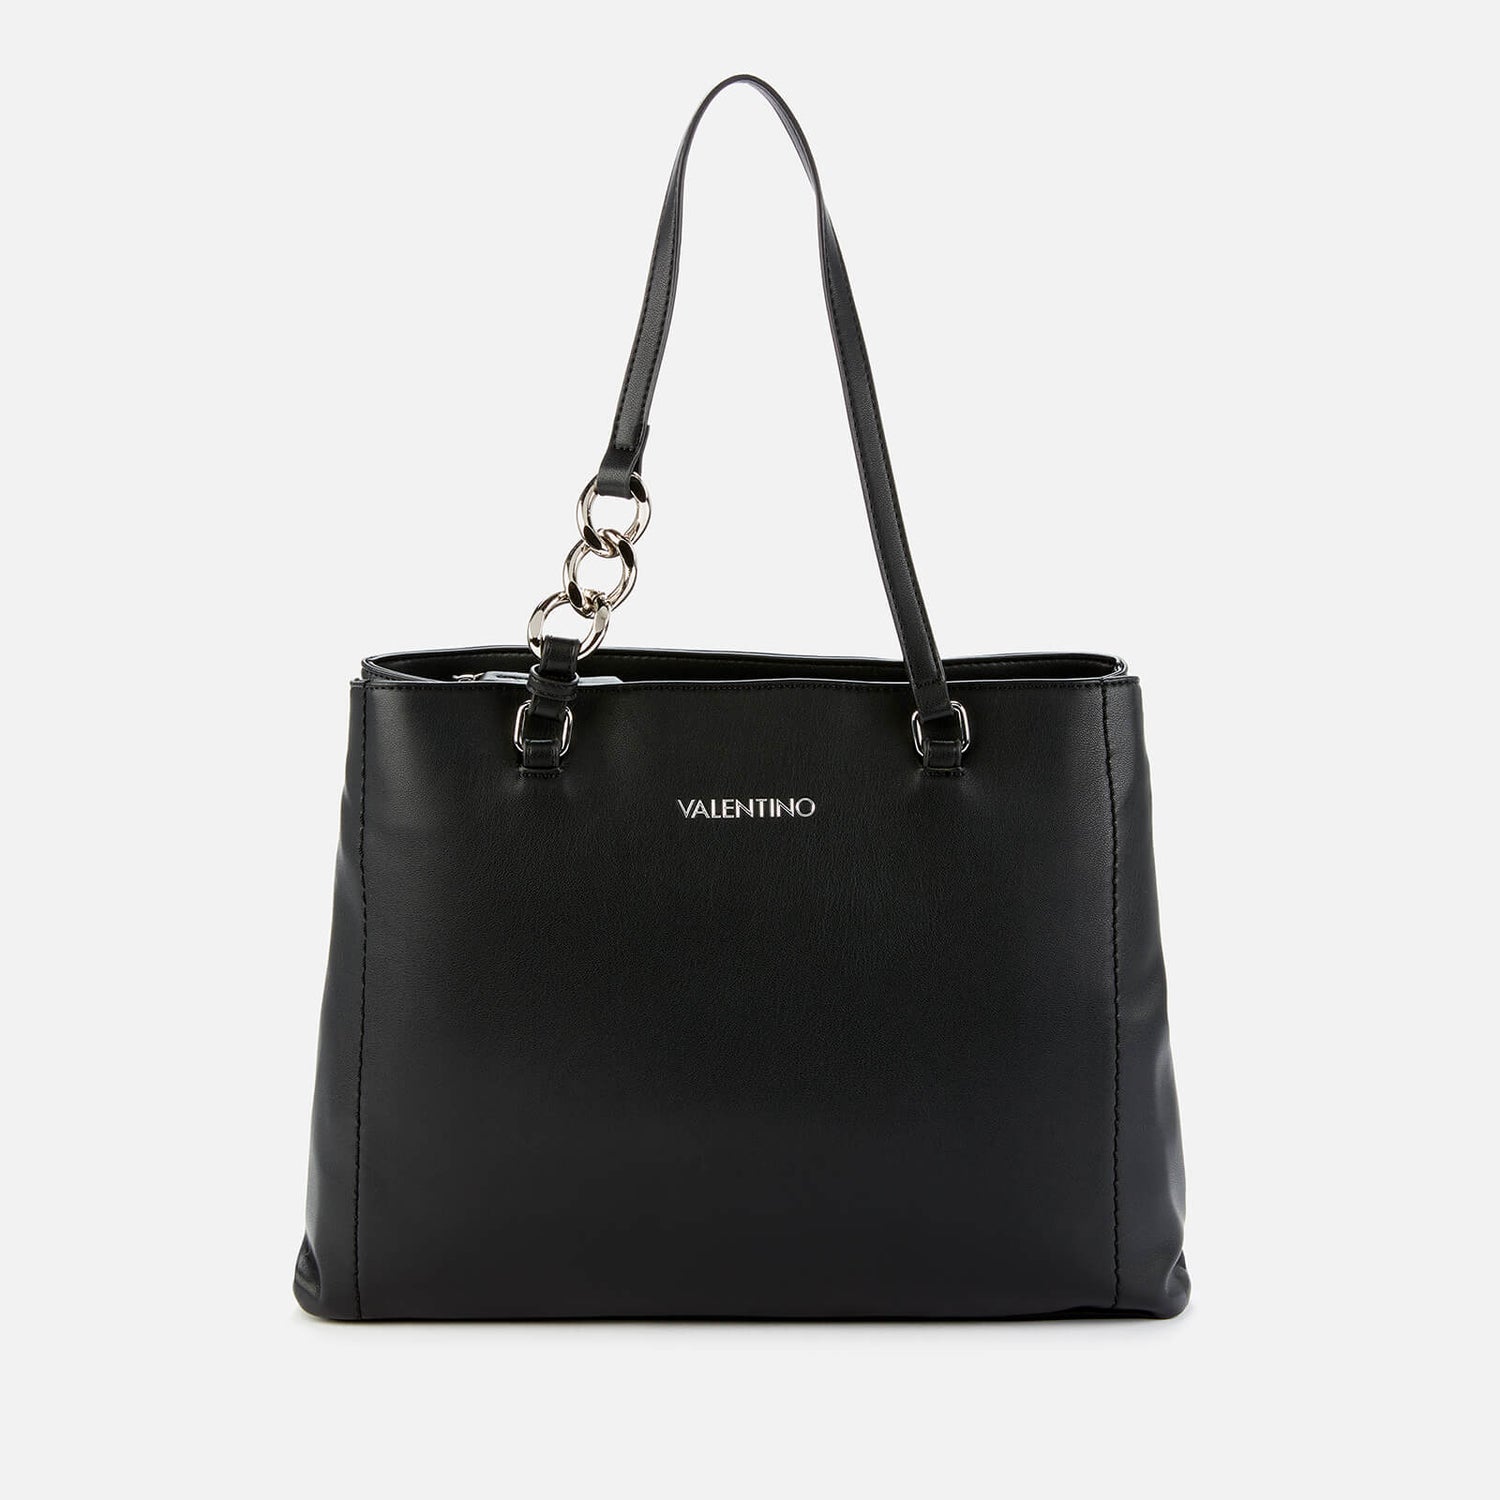 Valentino Bags Women's Elm Tote Bag - Black